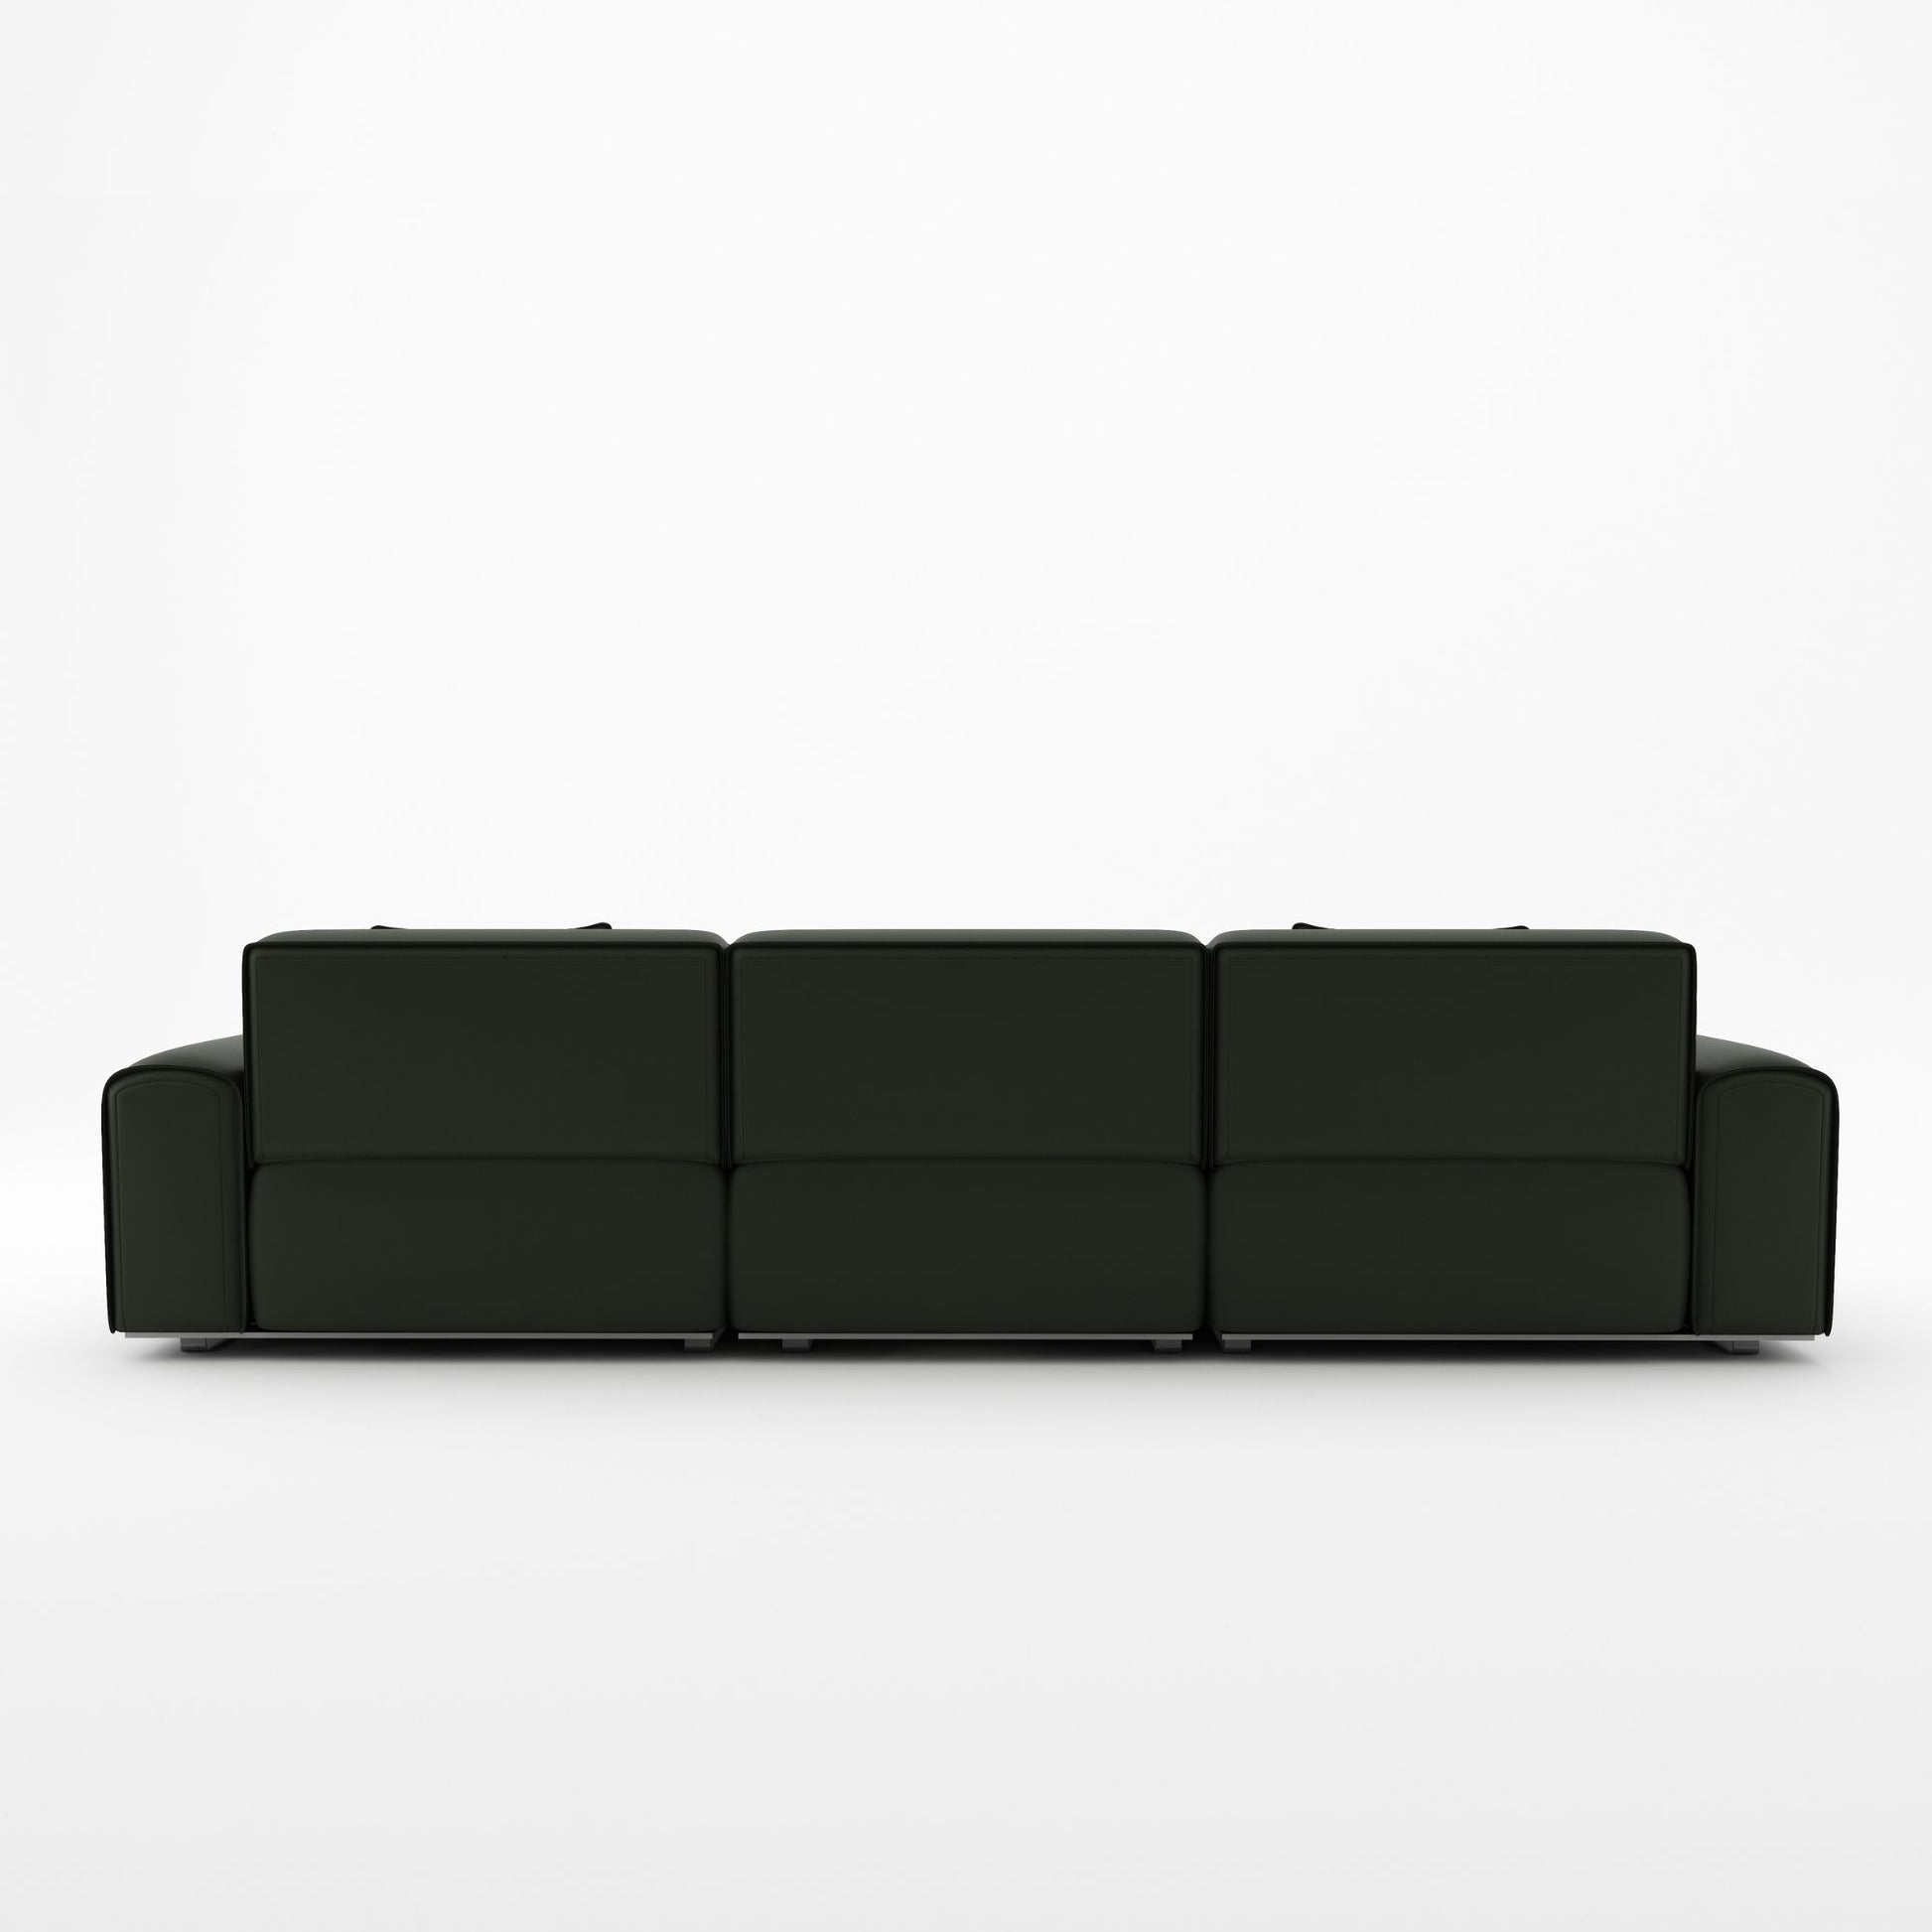 Colby dark green top grain half leather 3 seat sofa